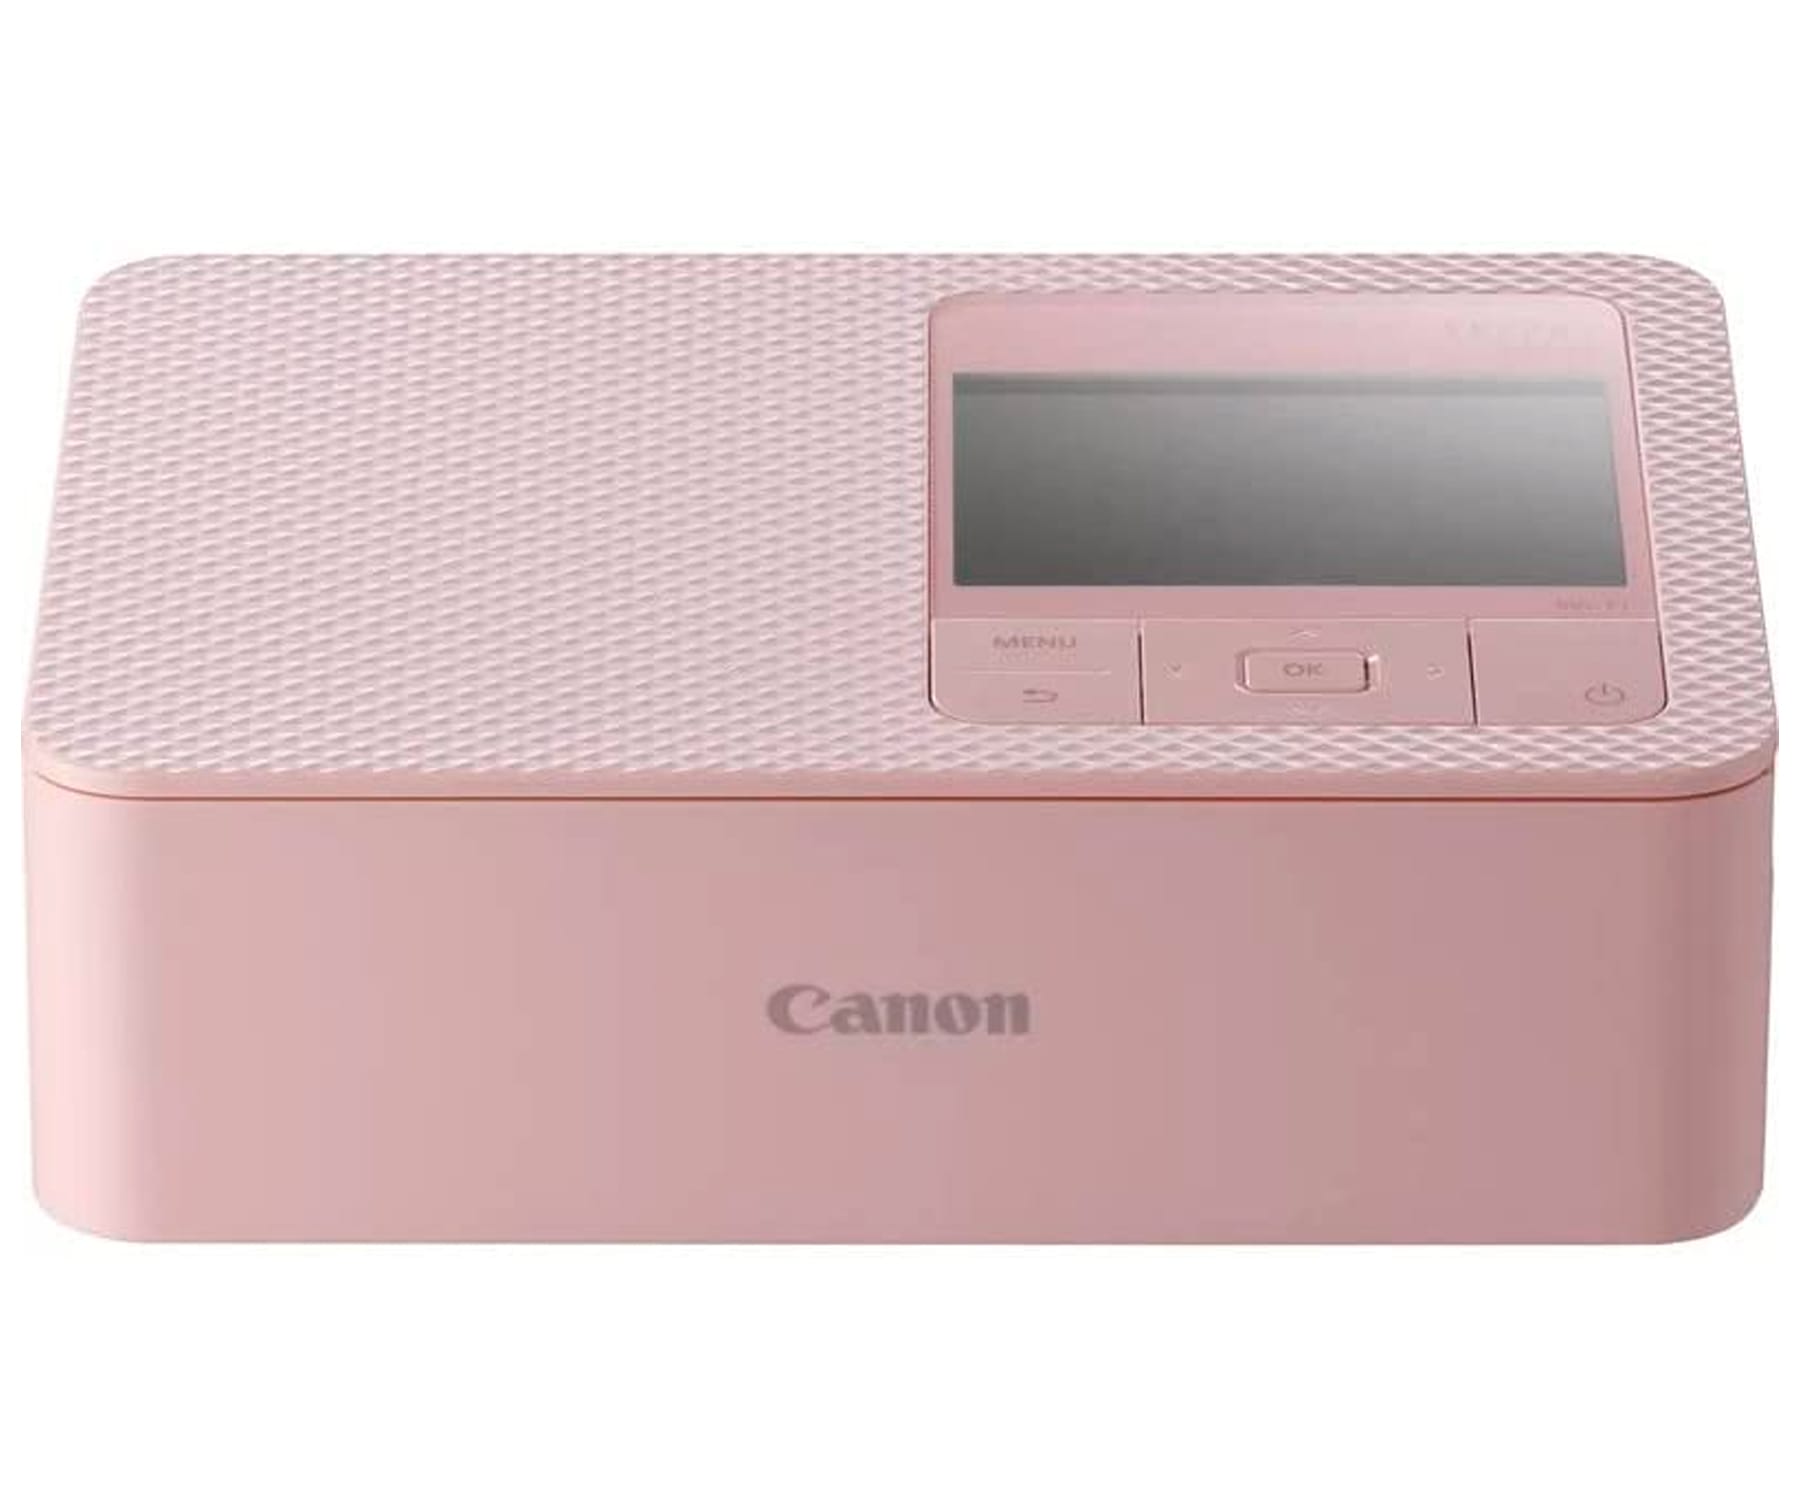 Canon Selphy CP1500 Pink / Impresora fotográfica